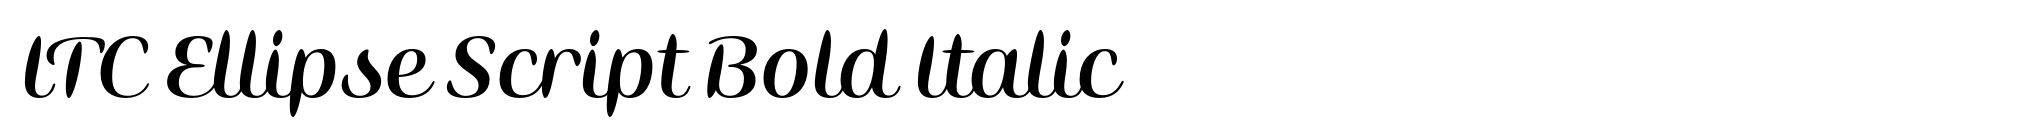 ITC Ellipse Script Bold Italic image